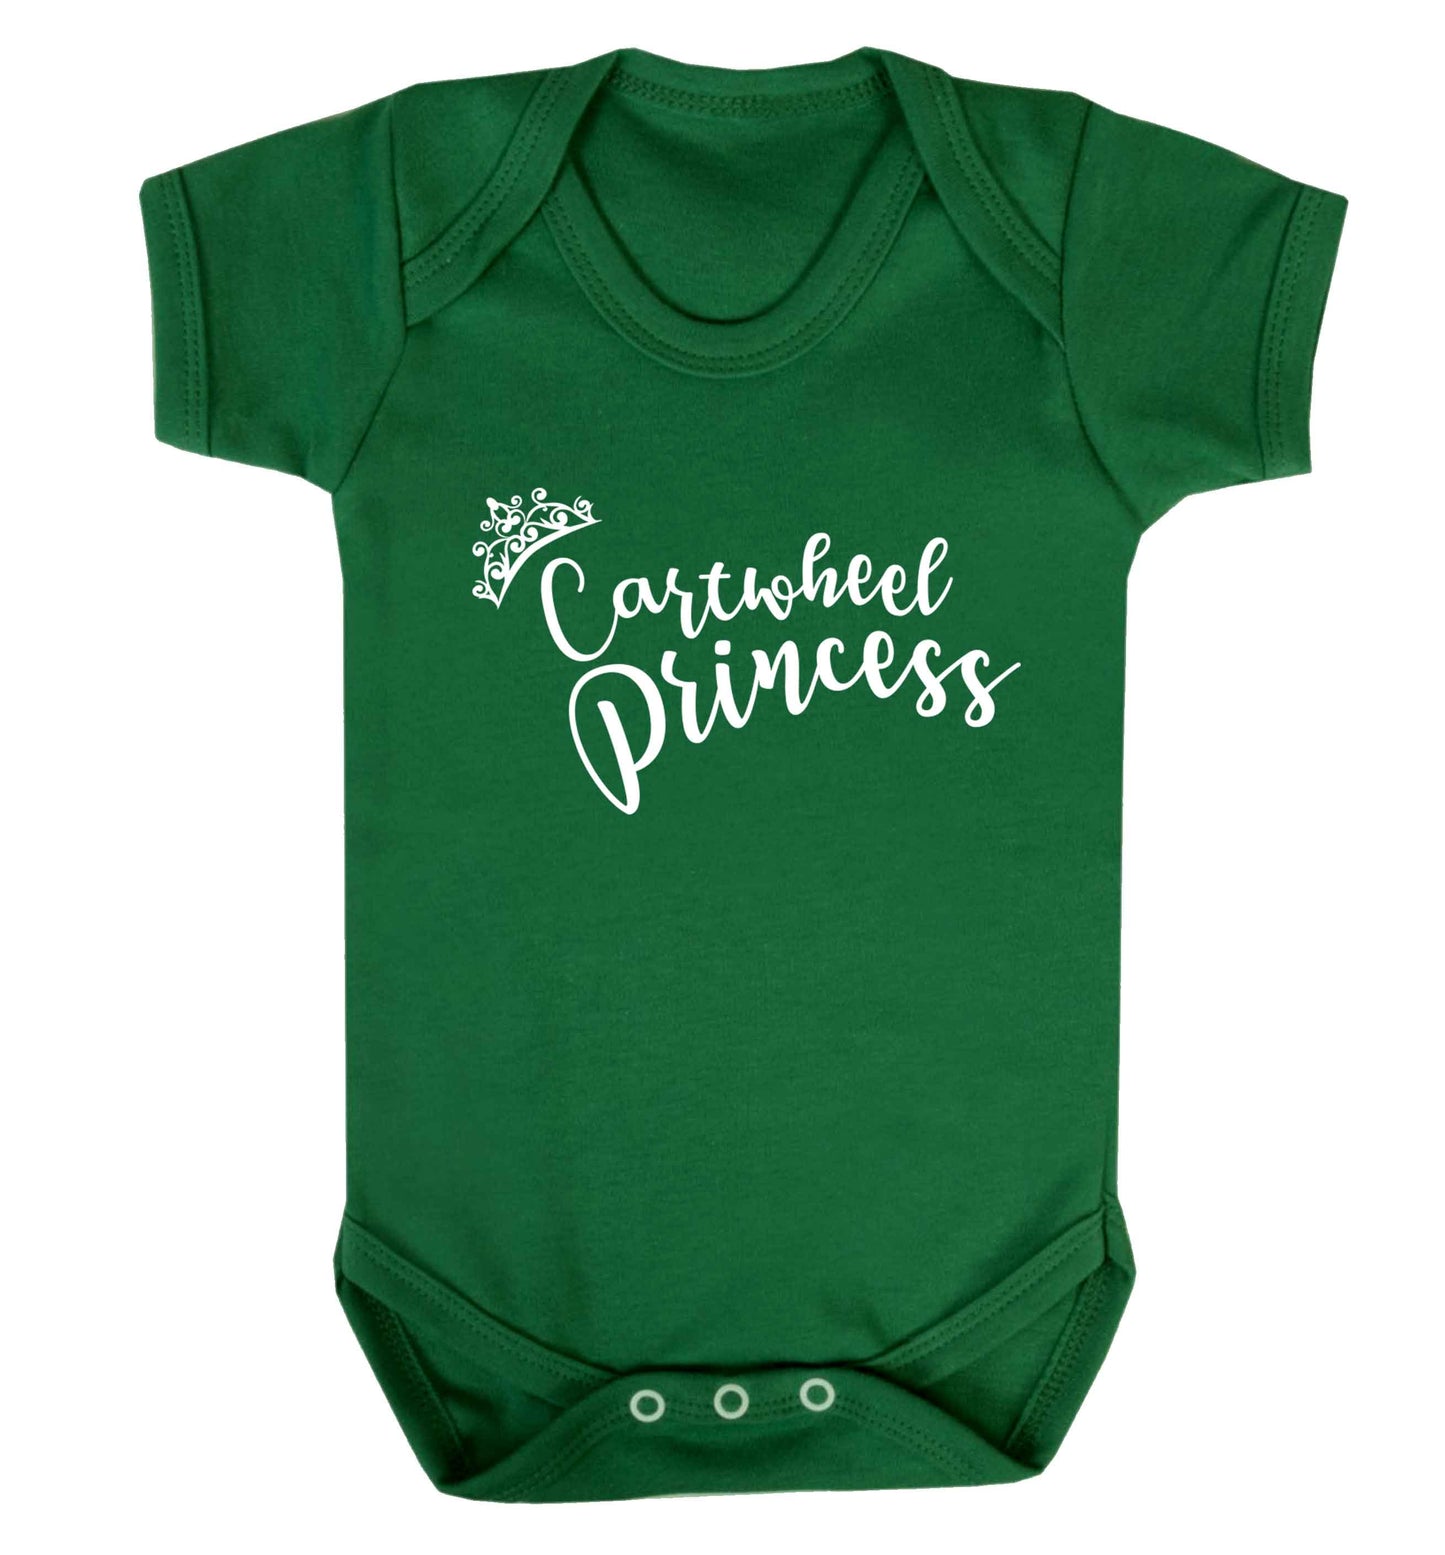 Cartwheel princess Baby Vest green 18-24 months